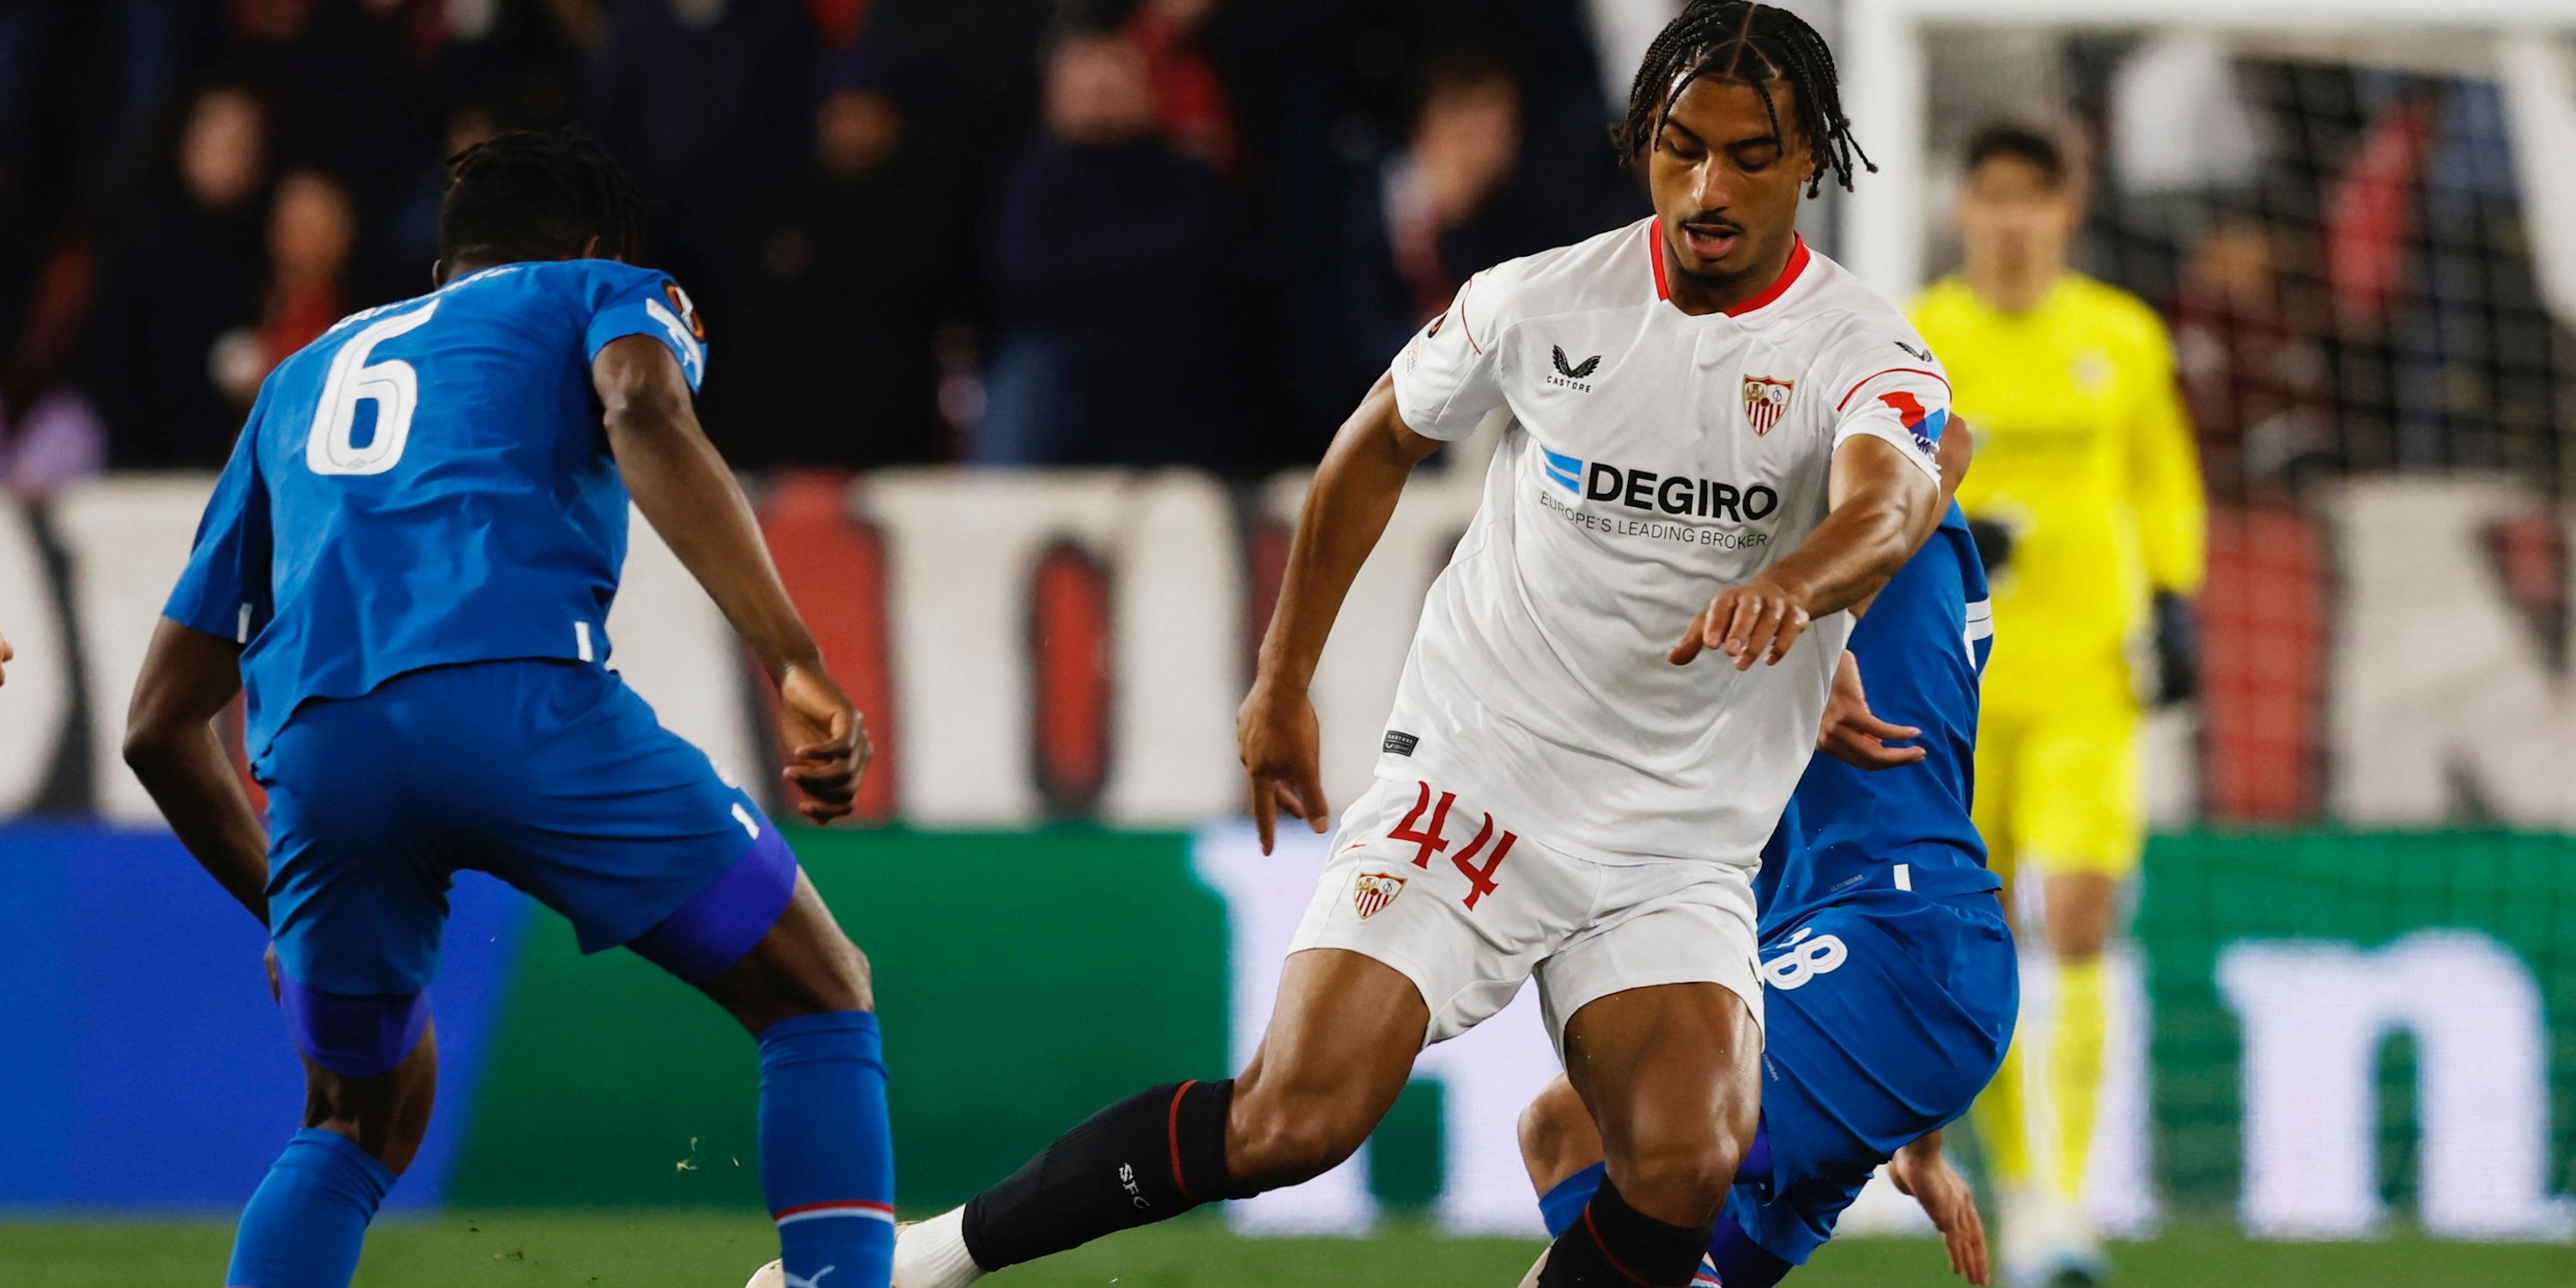 PSV Eindhoven's Ibrahim Sangare and Ismael Saibari in action with Sevilla's Loic Bade